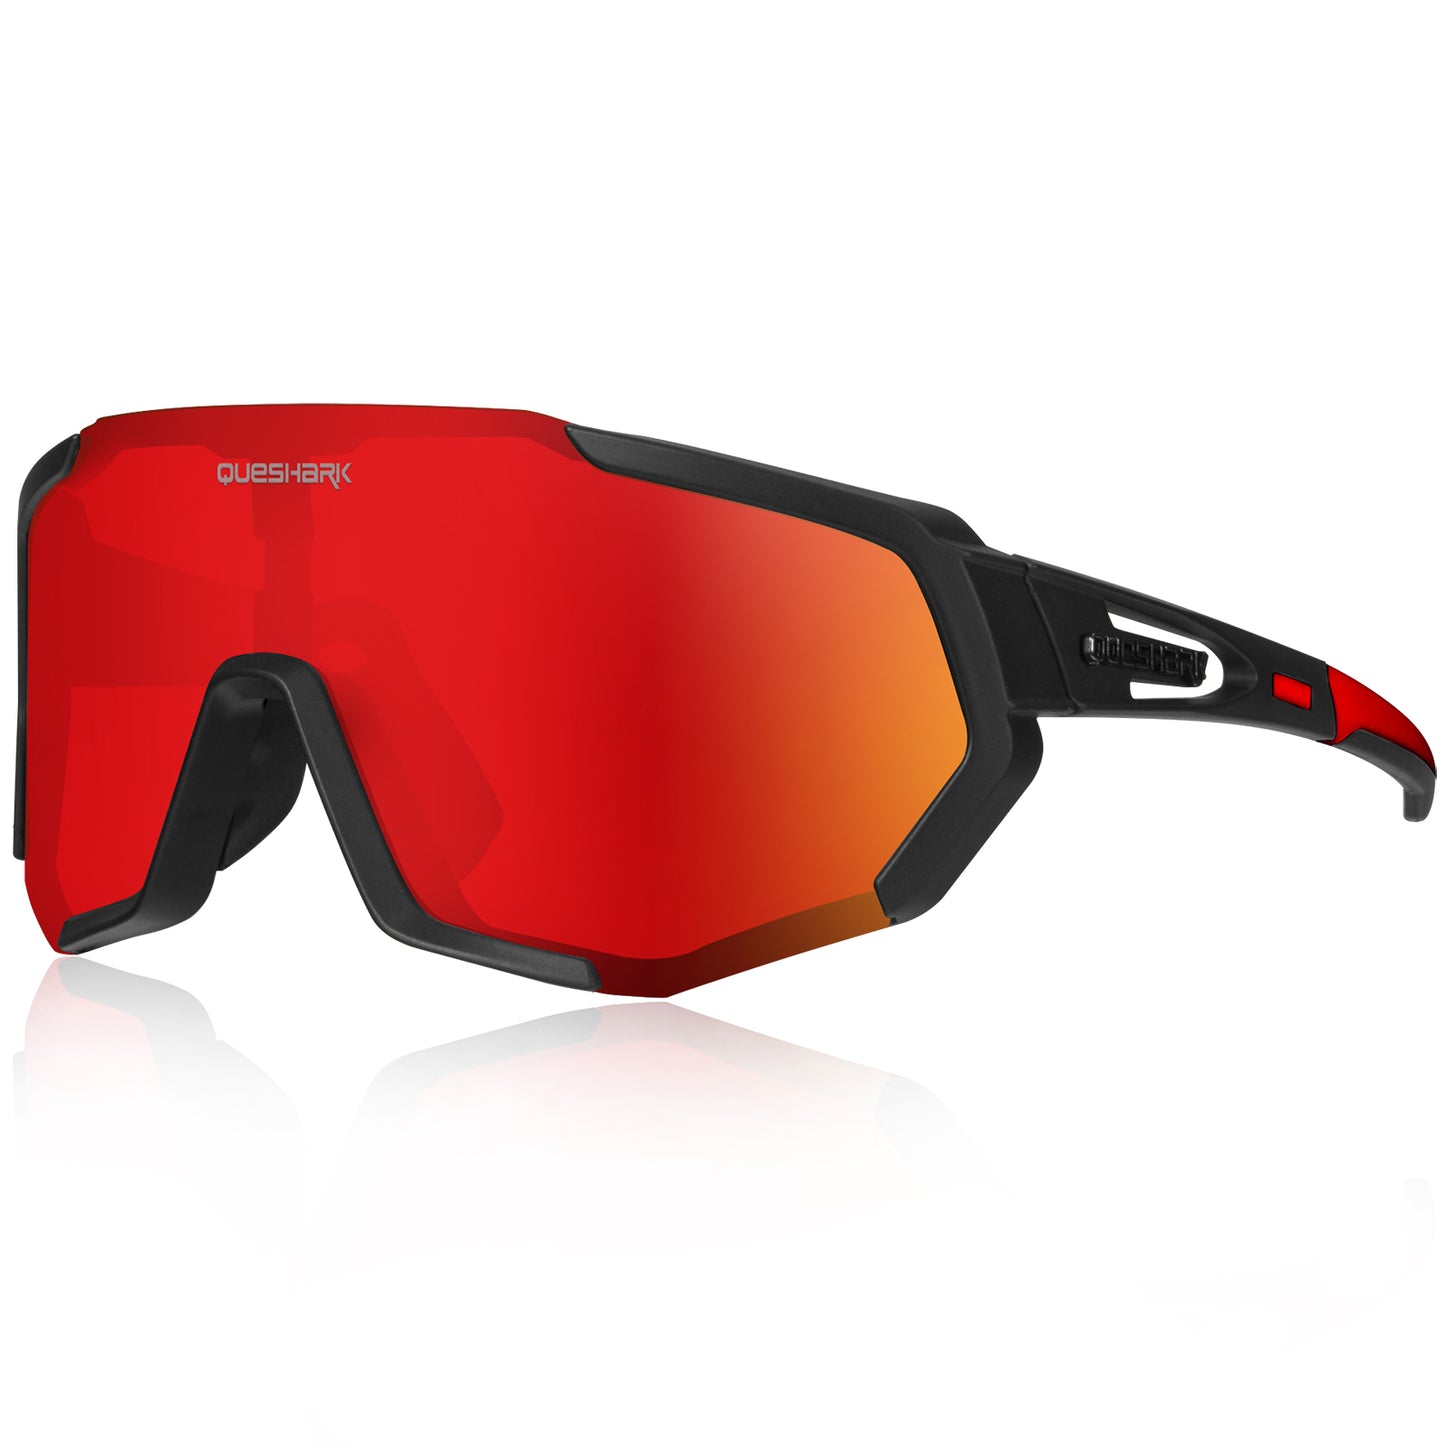 <transcy>QE48 noir rouge lunettes polarisées vélo lunettes de soleil lunettes de vélo lunettes de cyclisme UV400 5 lentille/ensemble</transcy>